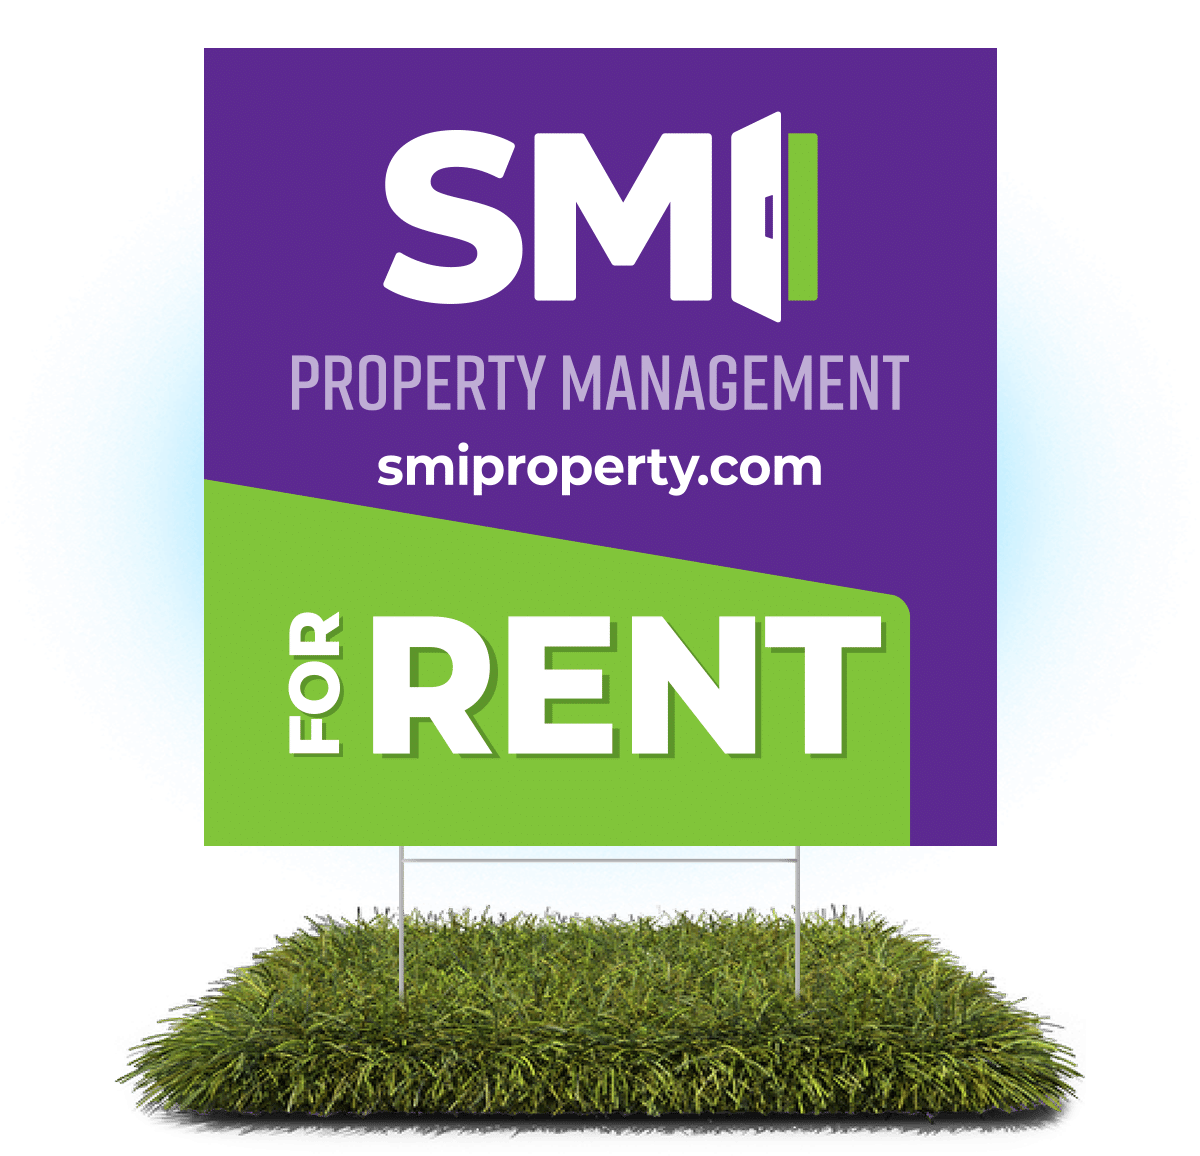 SMI Property Management Services - Marketing & Advertising